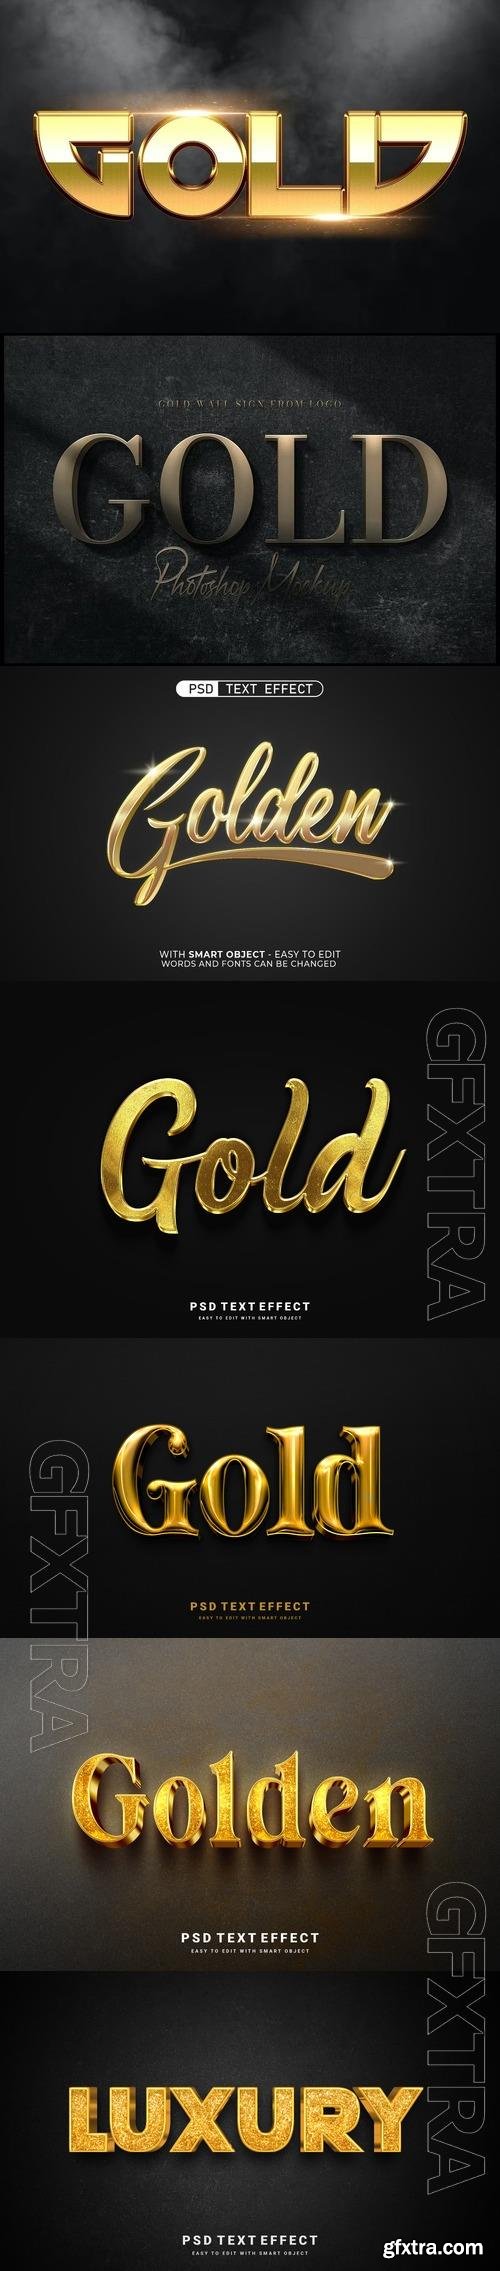 PSD shining gold creative editable text effect design